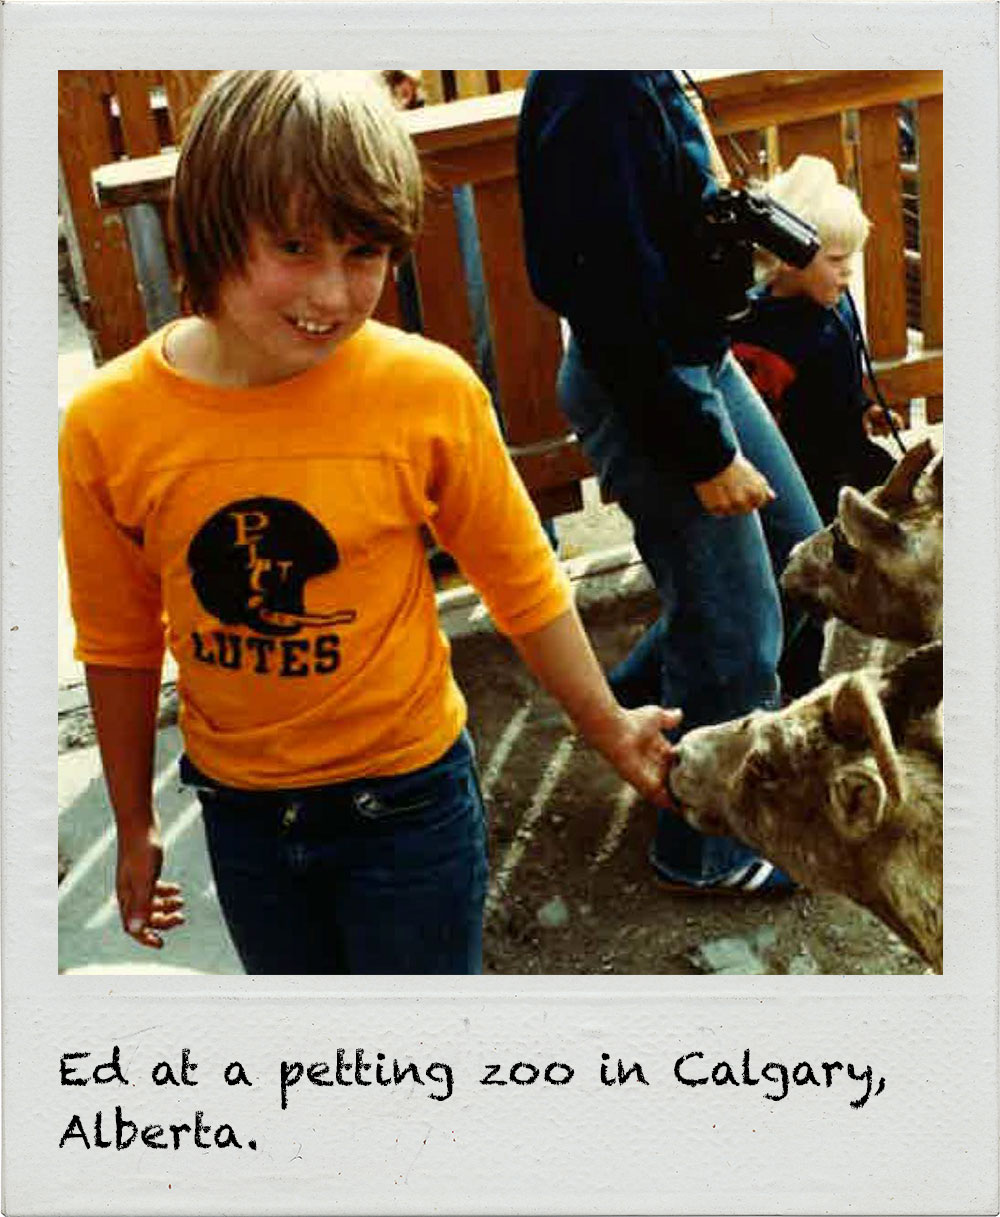 Ed at a petting zoo in Calgary, Alberta